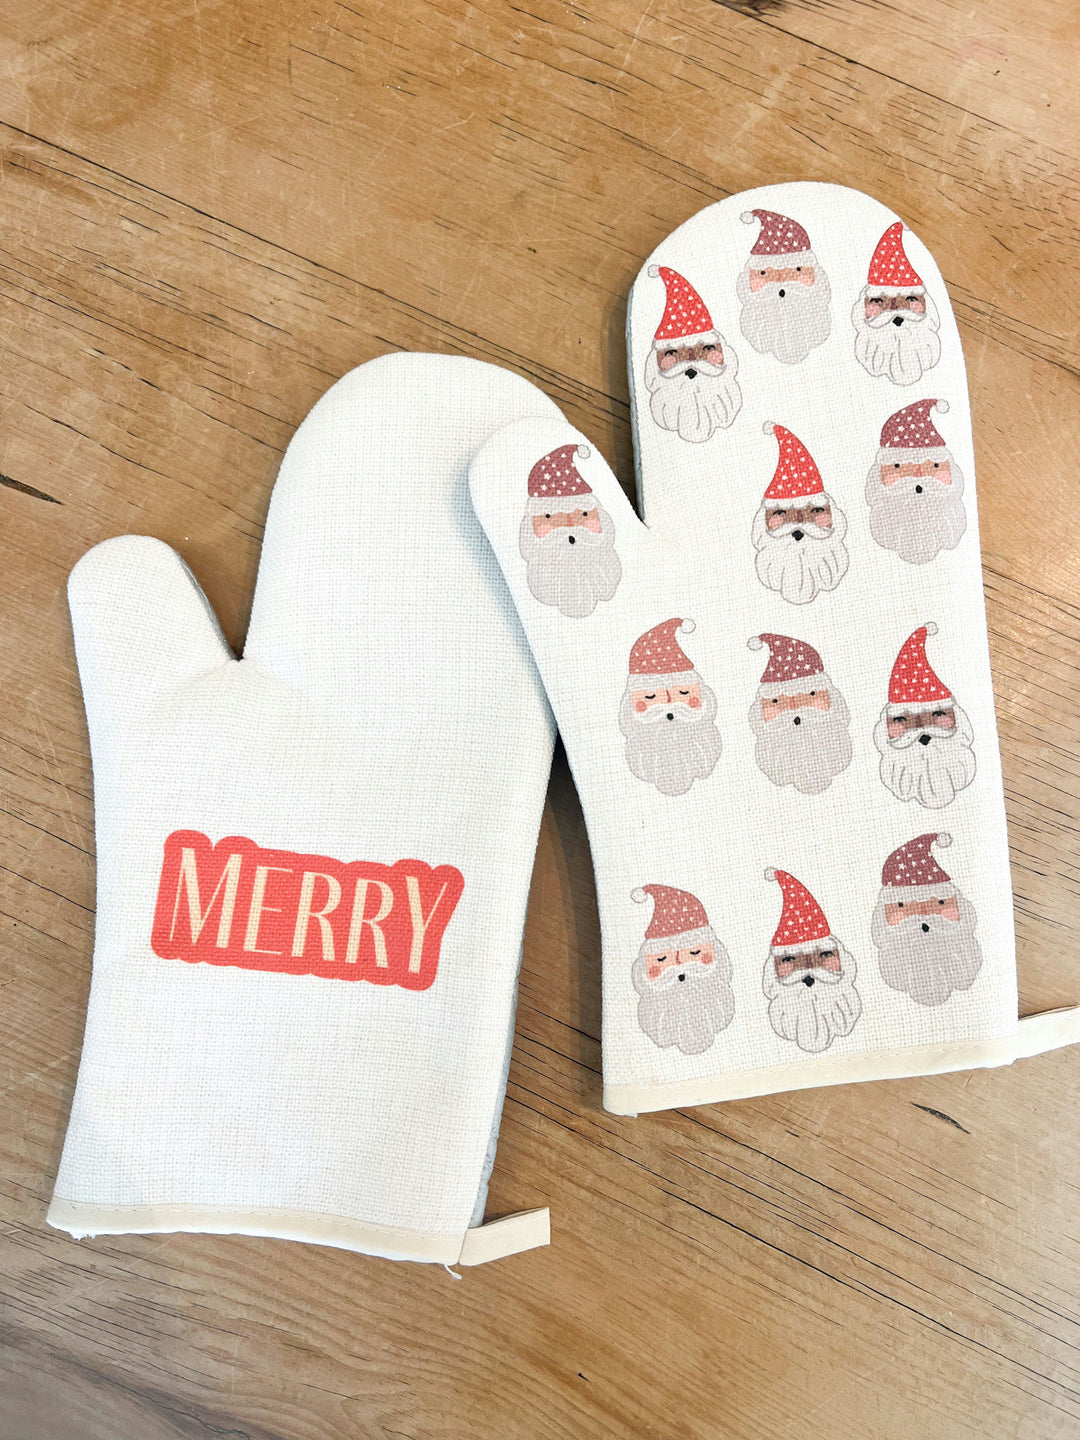 Merry Oven Mitt, Housewarming Gift, Christmas Gift